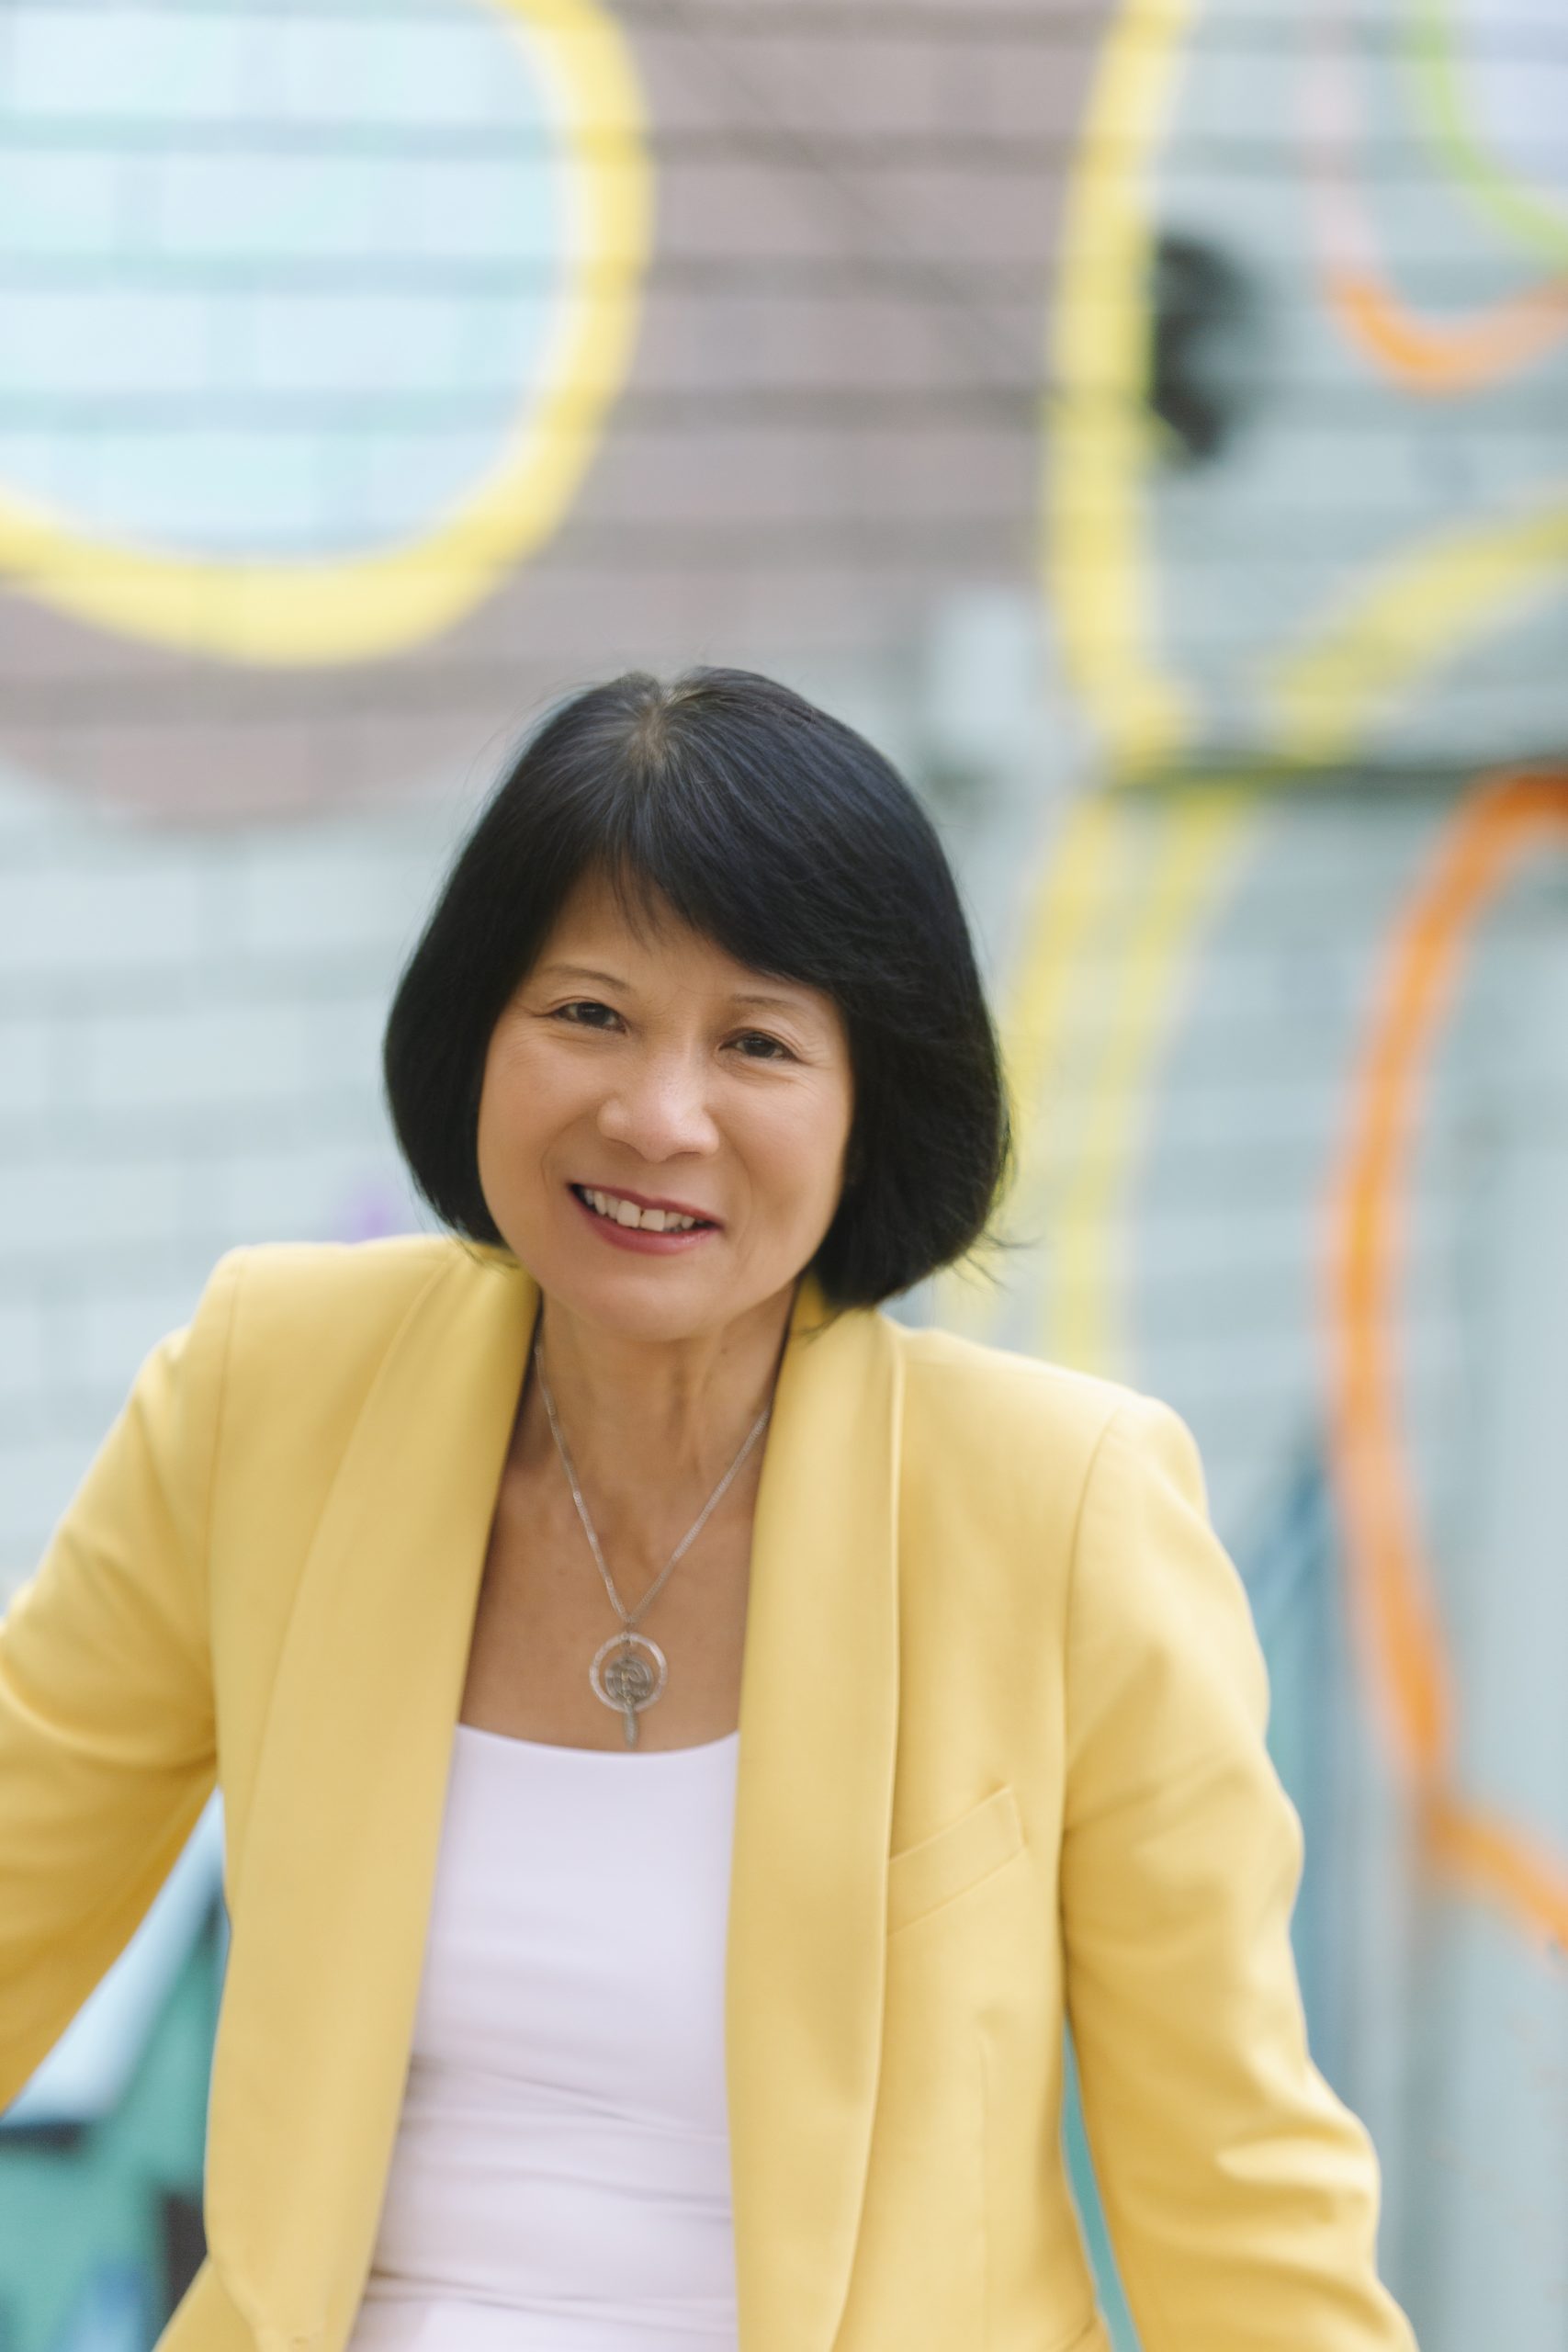 Mayor Olivia Chow